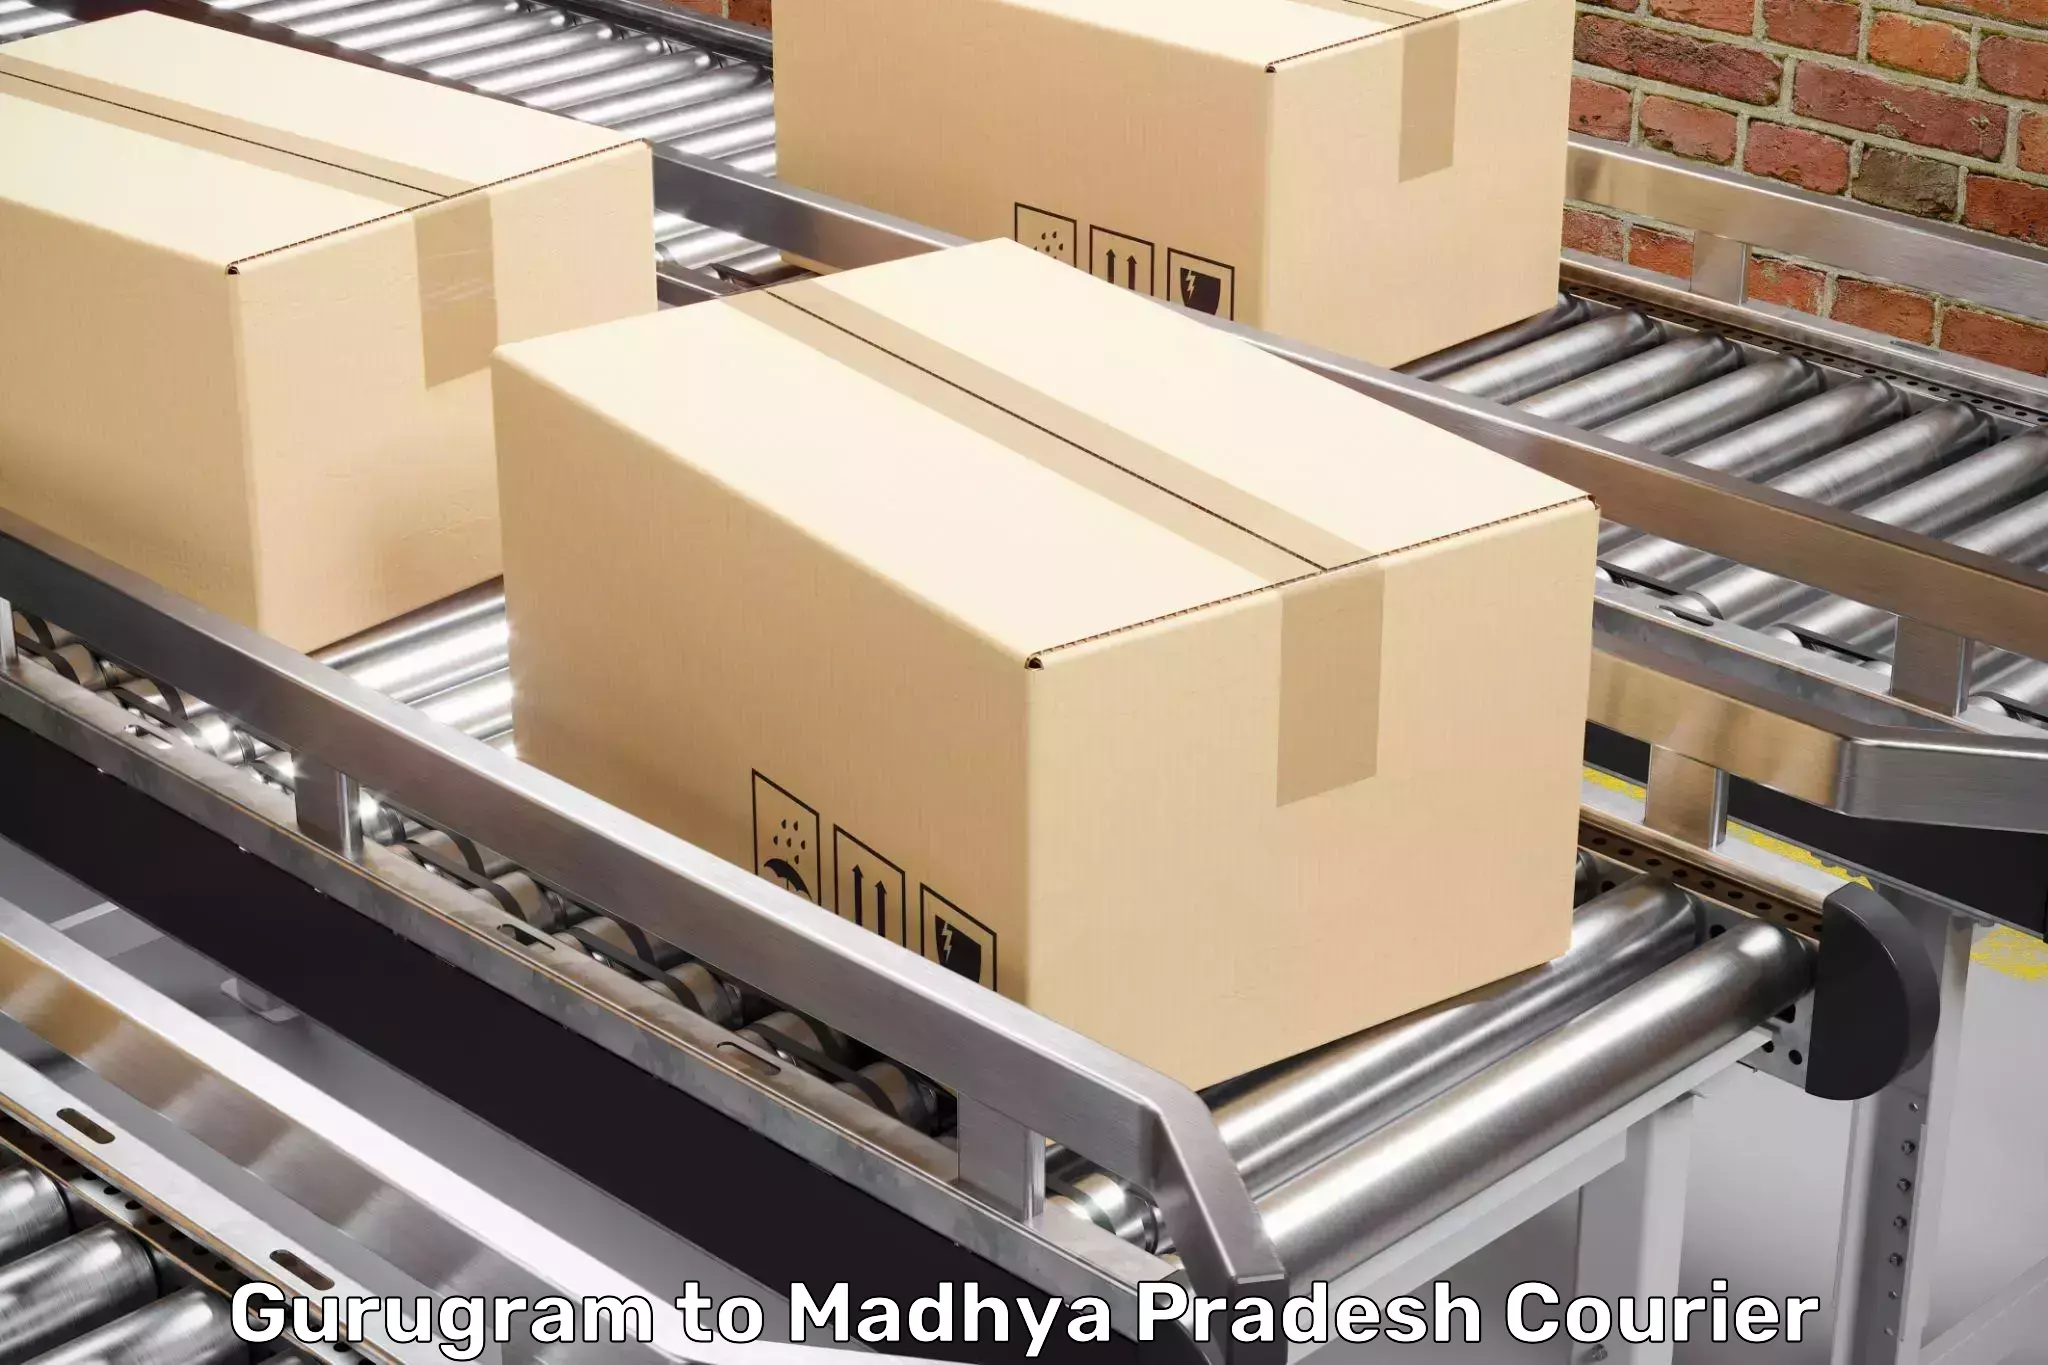 Home goods moving company in Gurugram to Vidisha